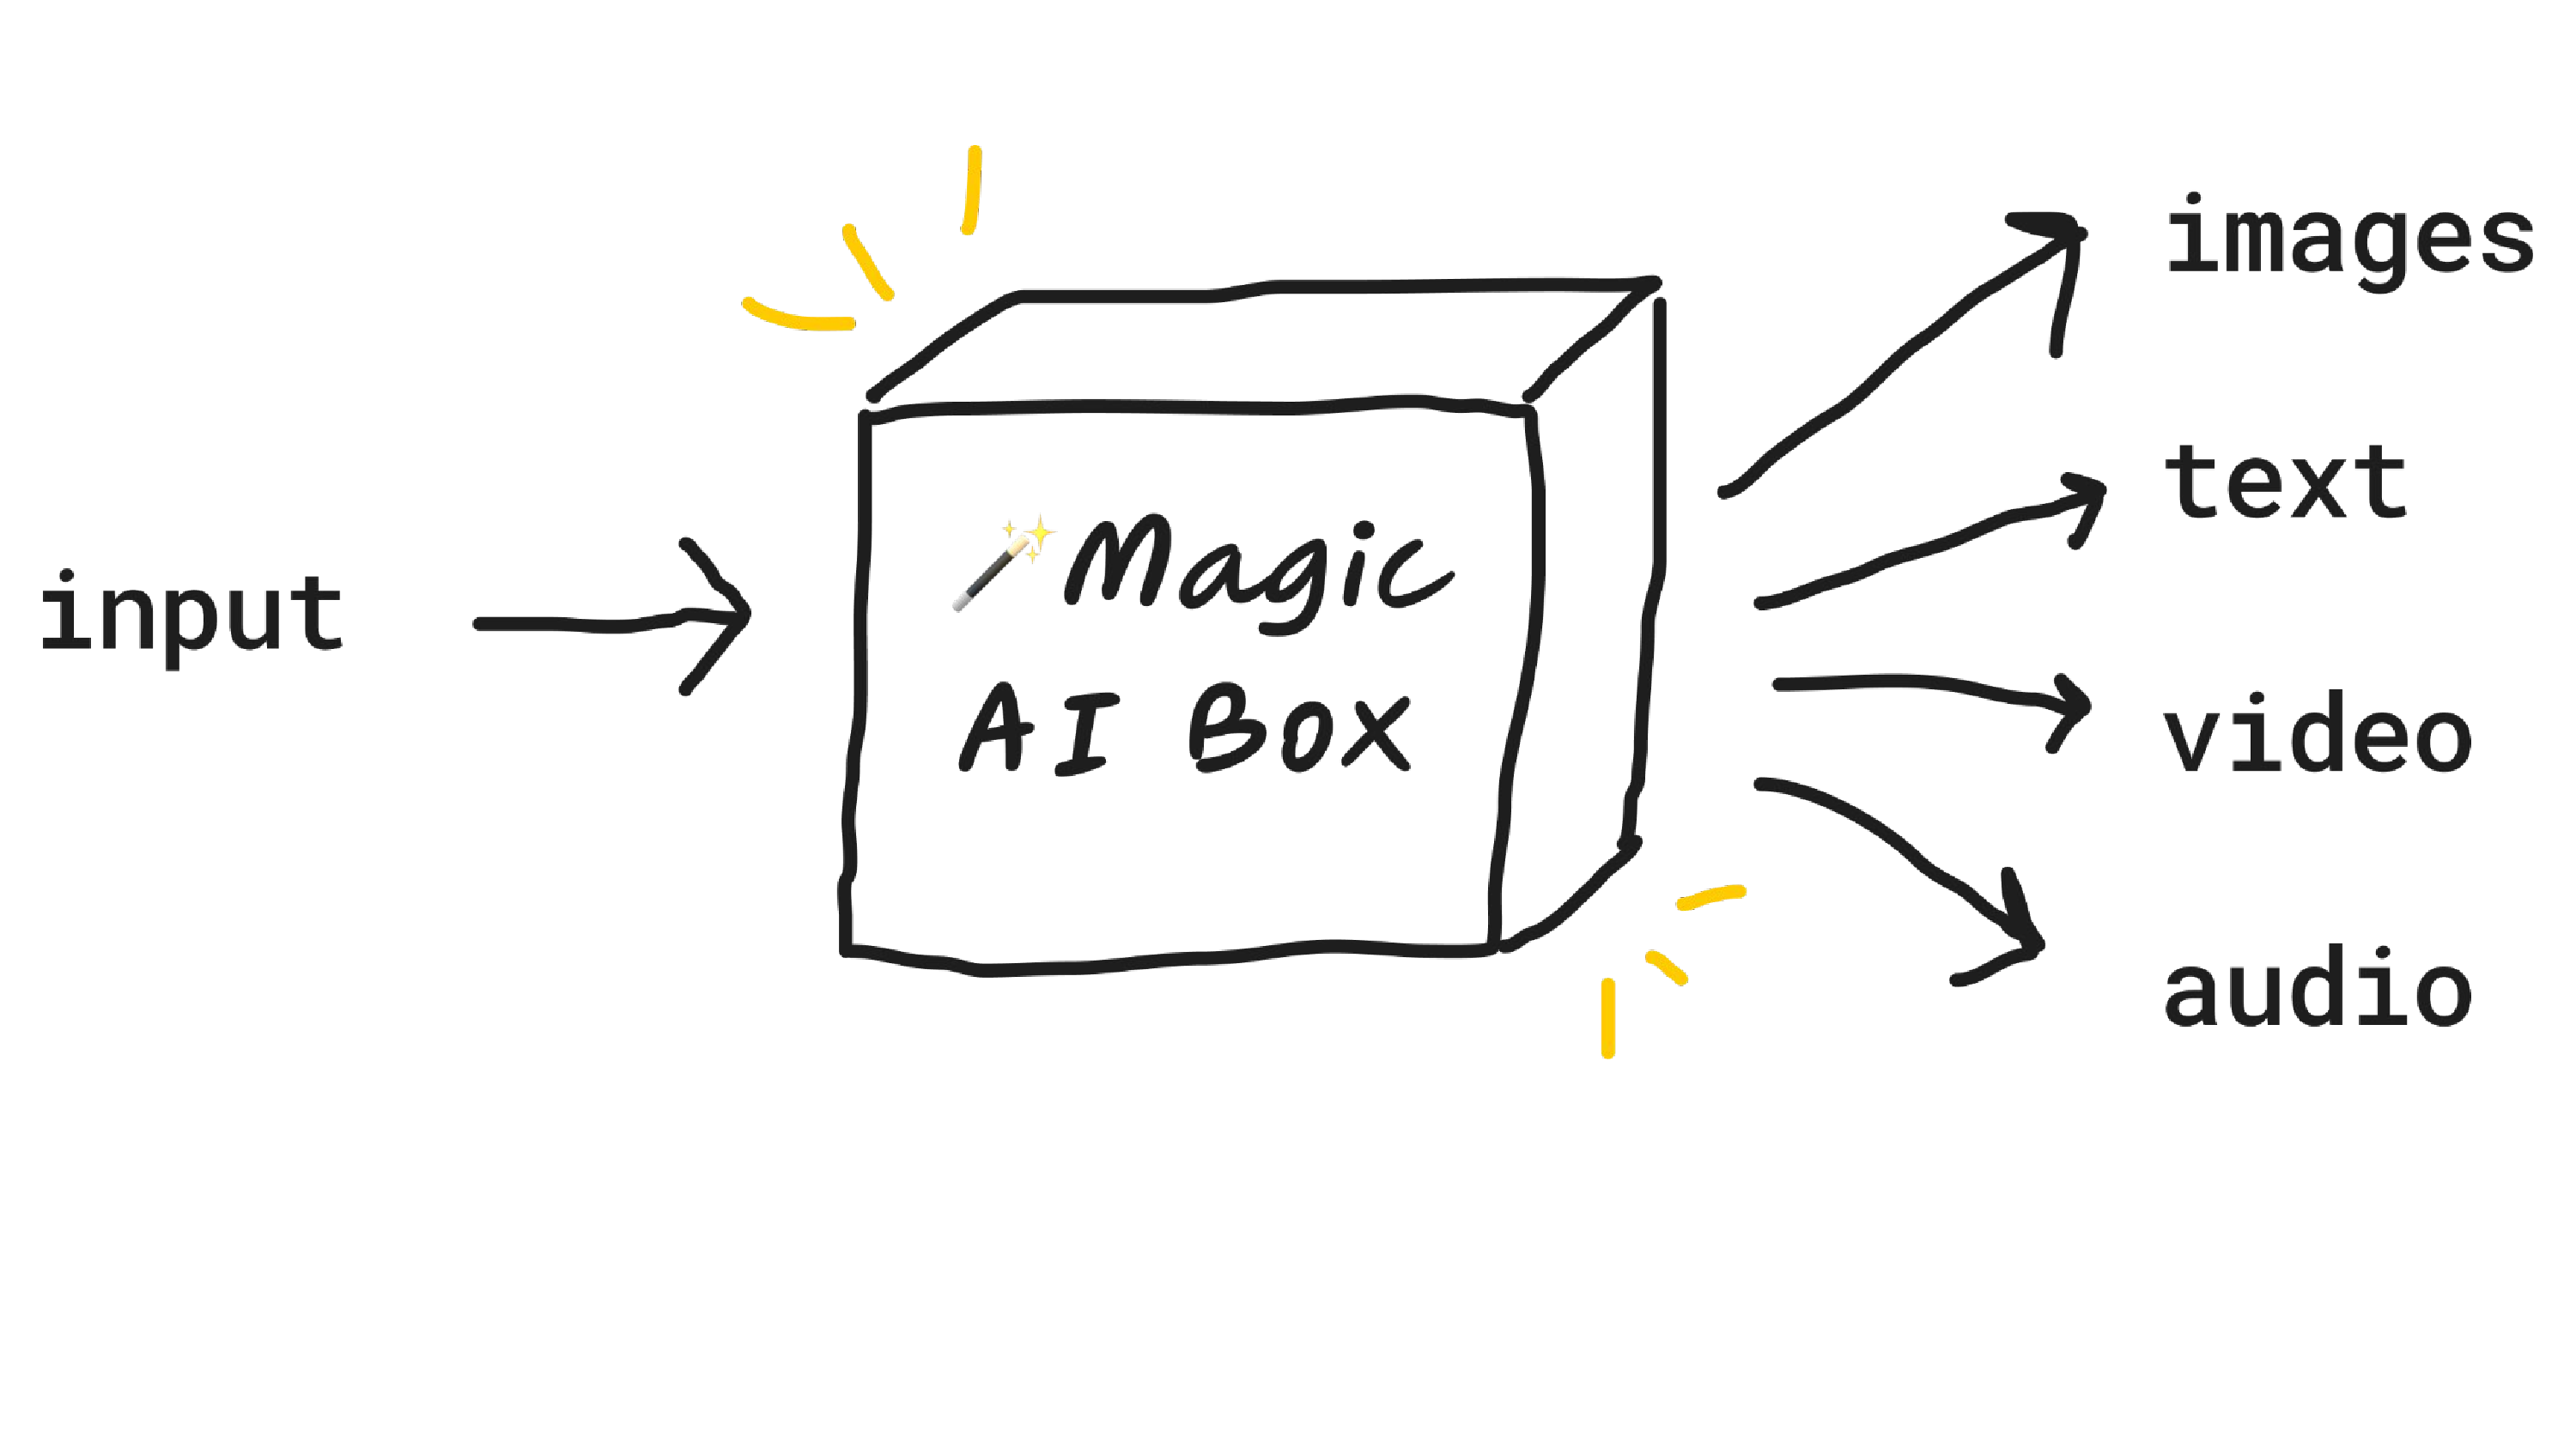 magic ai box can do lots of things